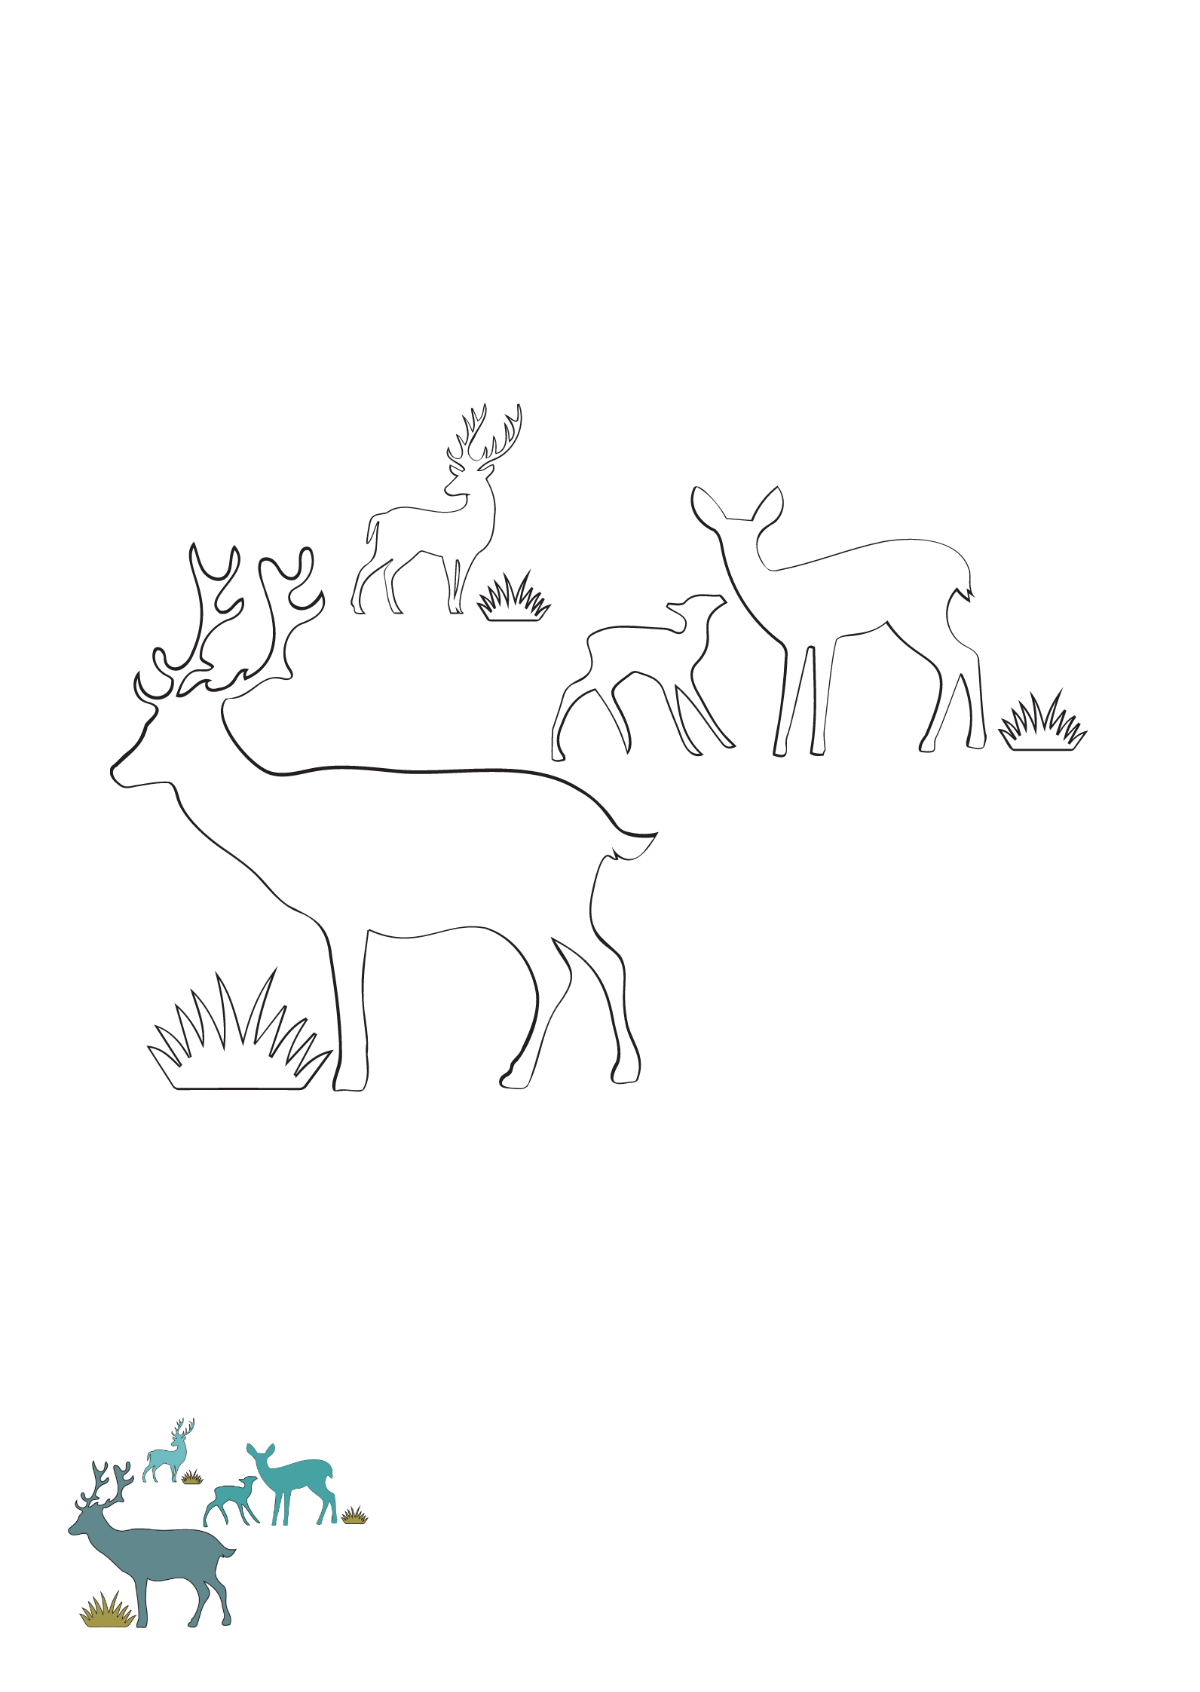 Deer Scene Coloring Page Template